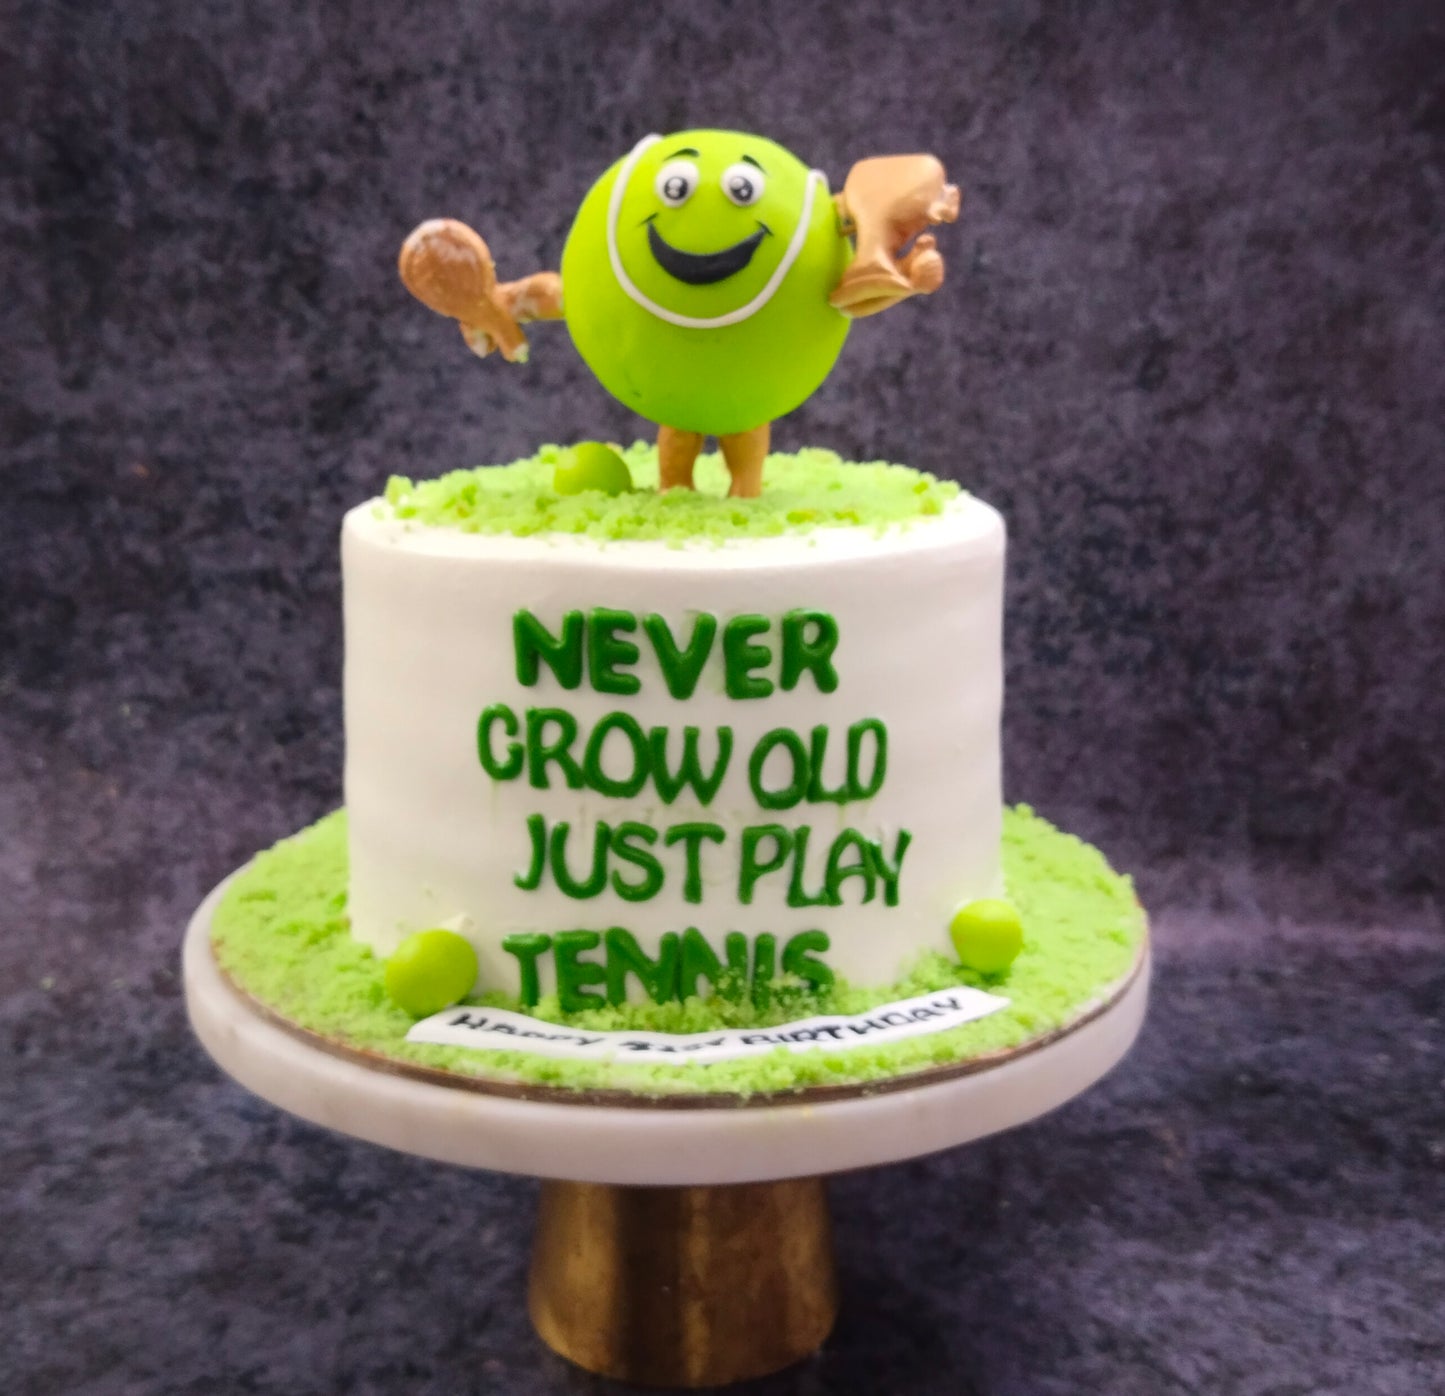 Tennis Theme cake